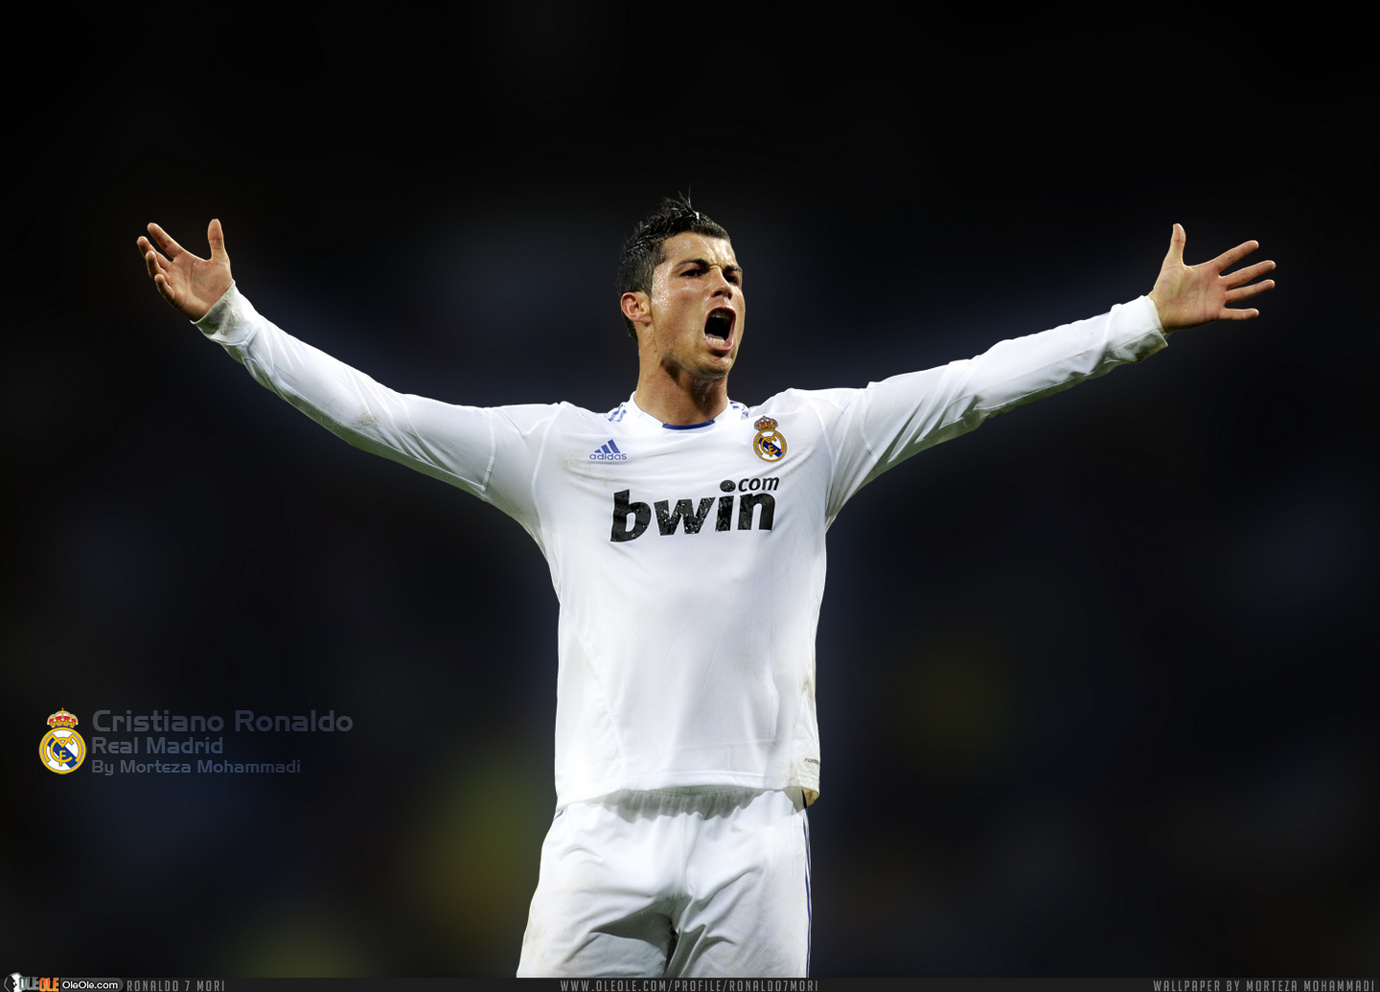 http://3.bp.blogspot.com/-gxzdZopl2NA/T2ui065RAPI/AAAAAAAAAPo/tO02uScr3XI/s1600/Cristiano-Ronaldo-Real-Madrid-Wallpaper-12-1024x768.jpg